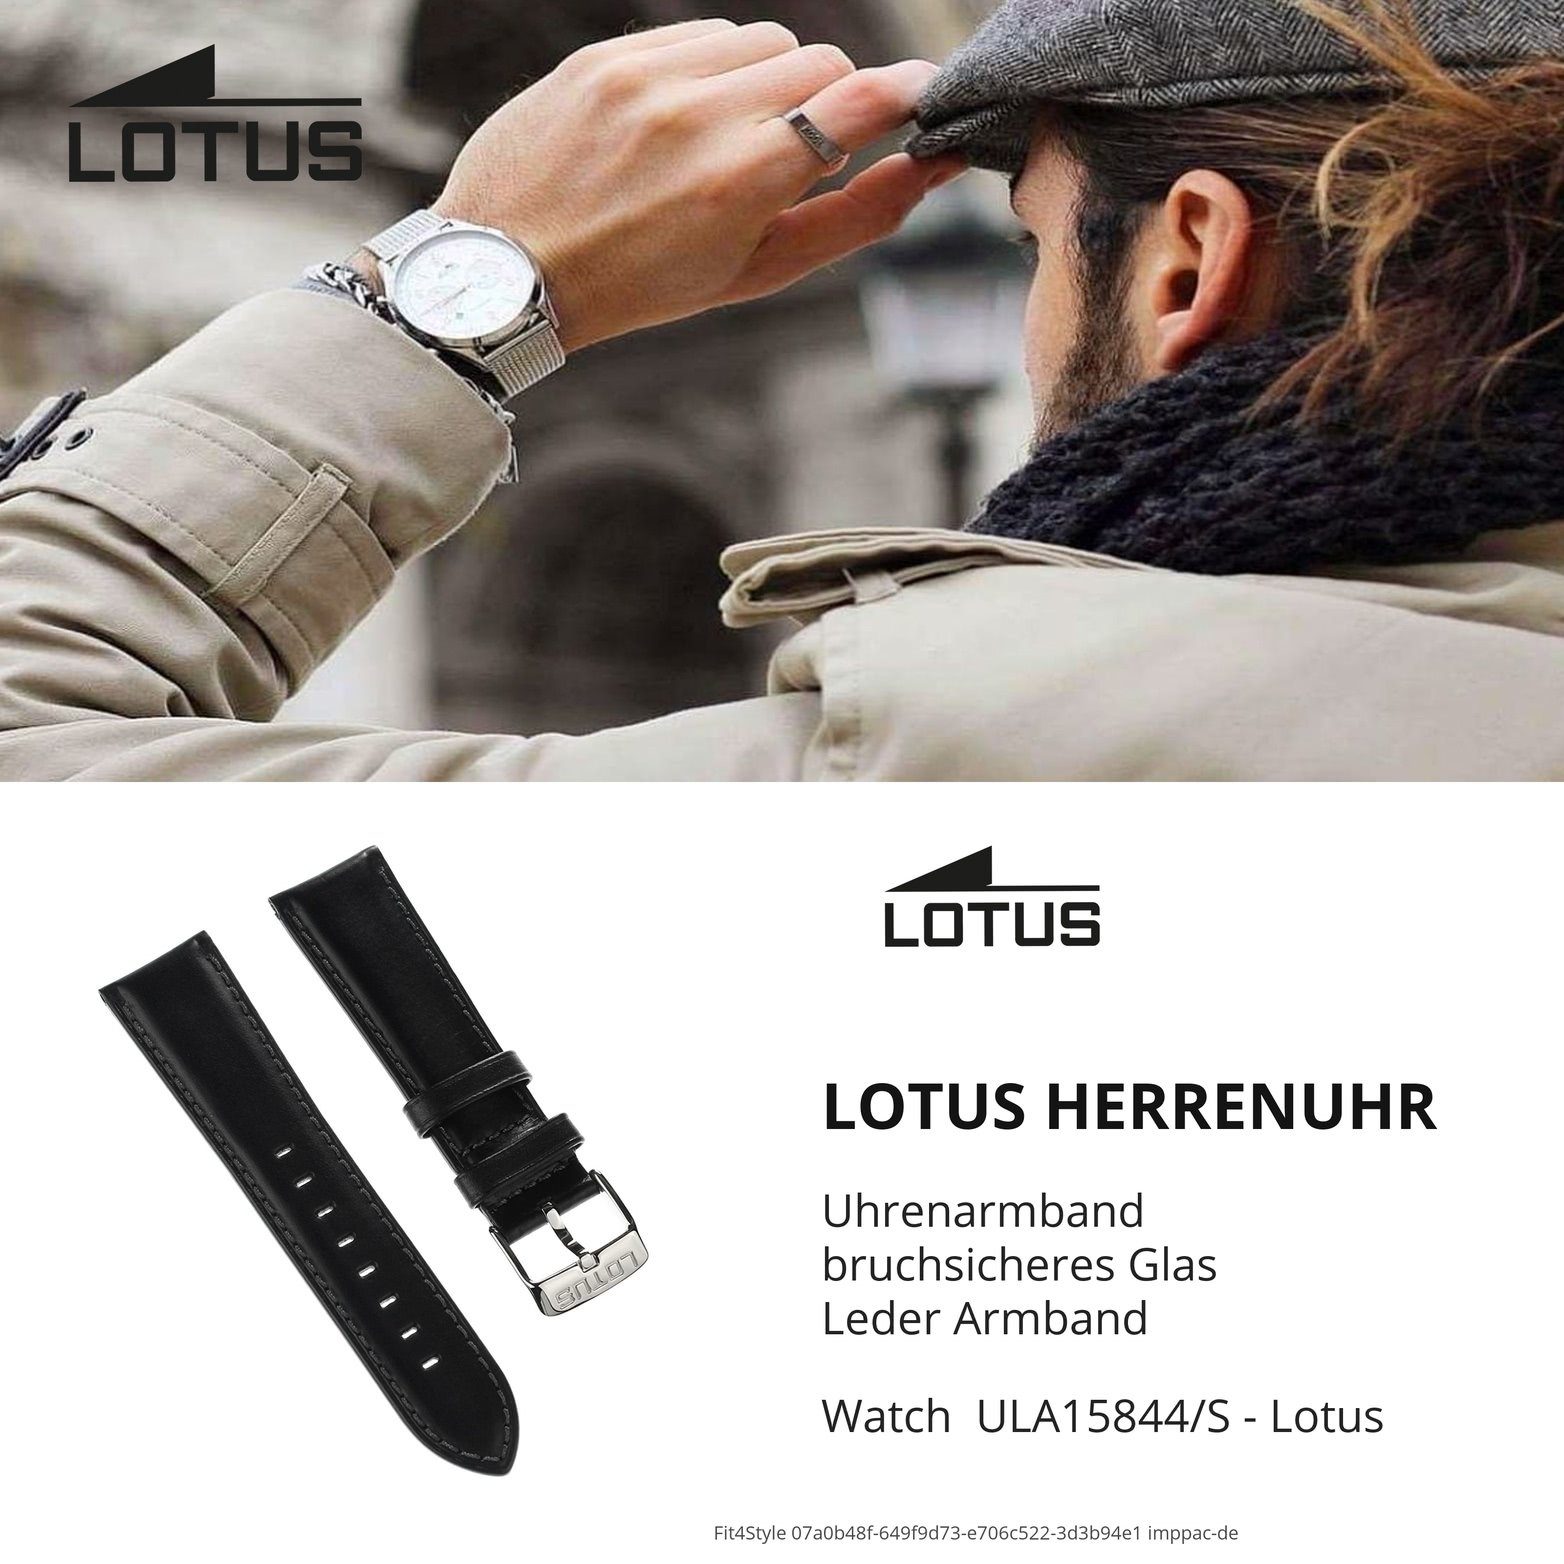 Lotus Uhrenarmband Lotus Lederarmband, Herren Uhrenarmband 24mm, Herrenuhr mit Sport-Style